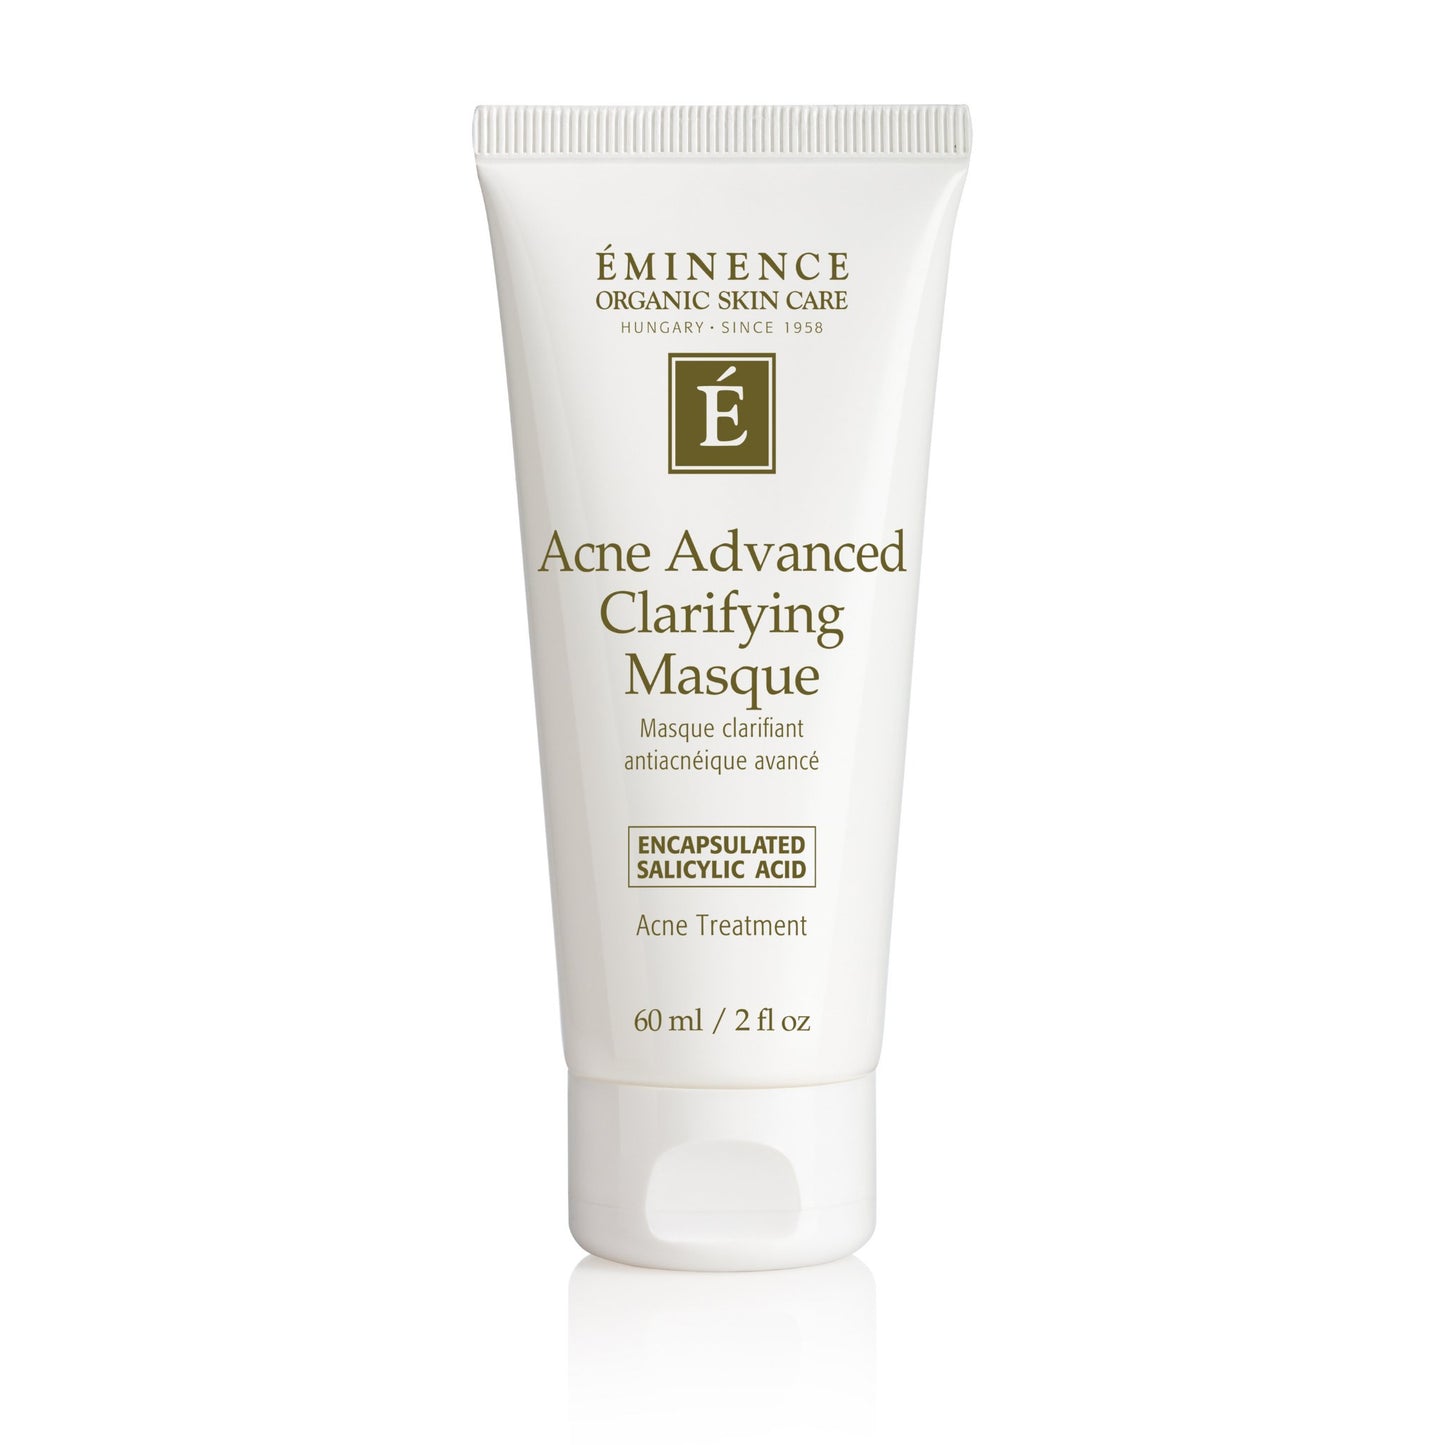 Eminence Organics - Eminence Acne Advanced Clarifying Masque - ORESTA clean beauty simplified